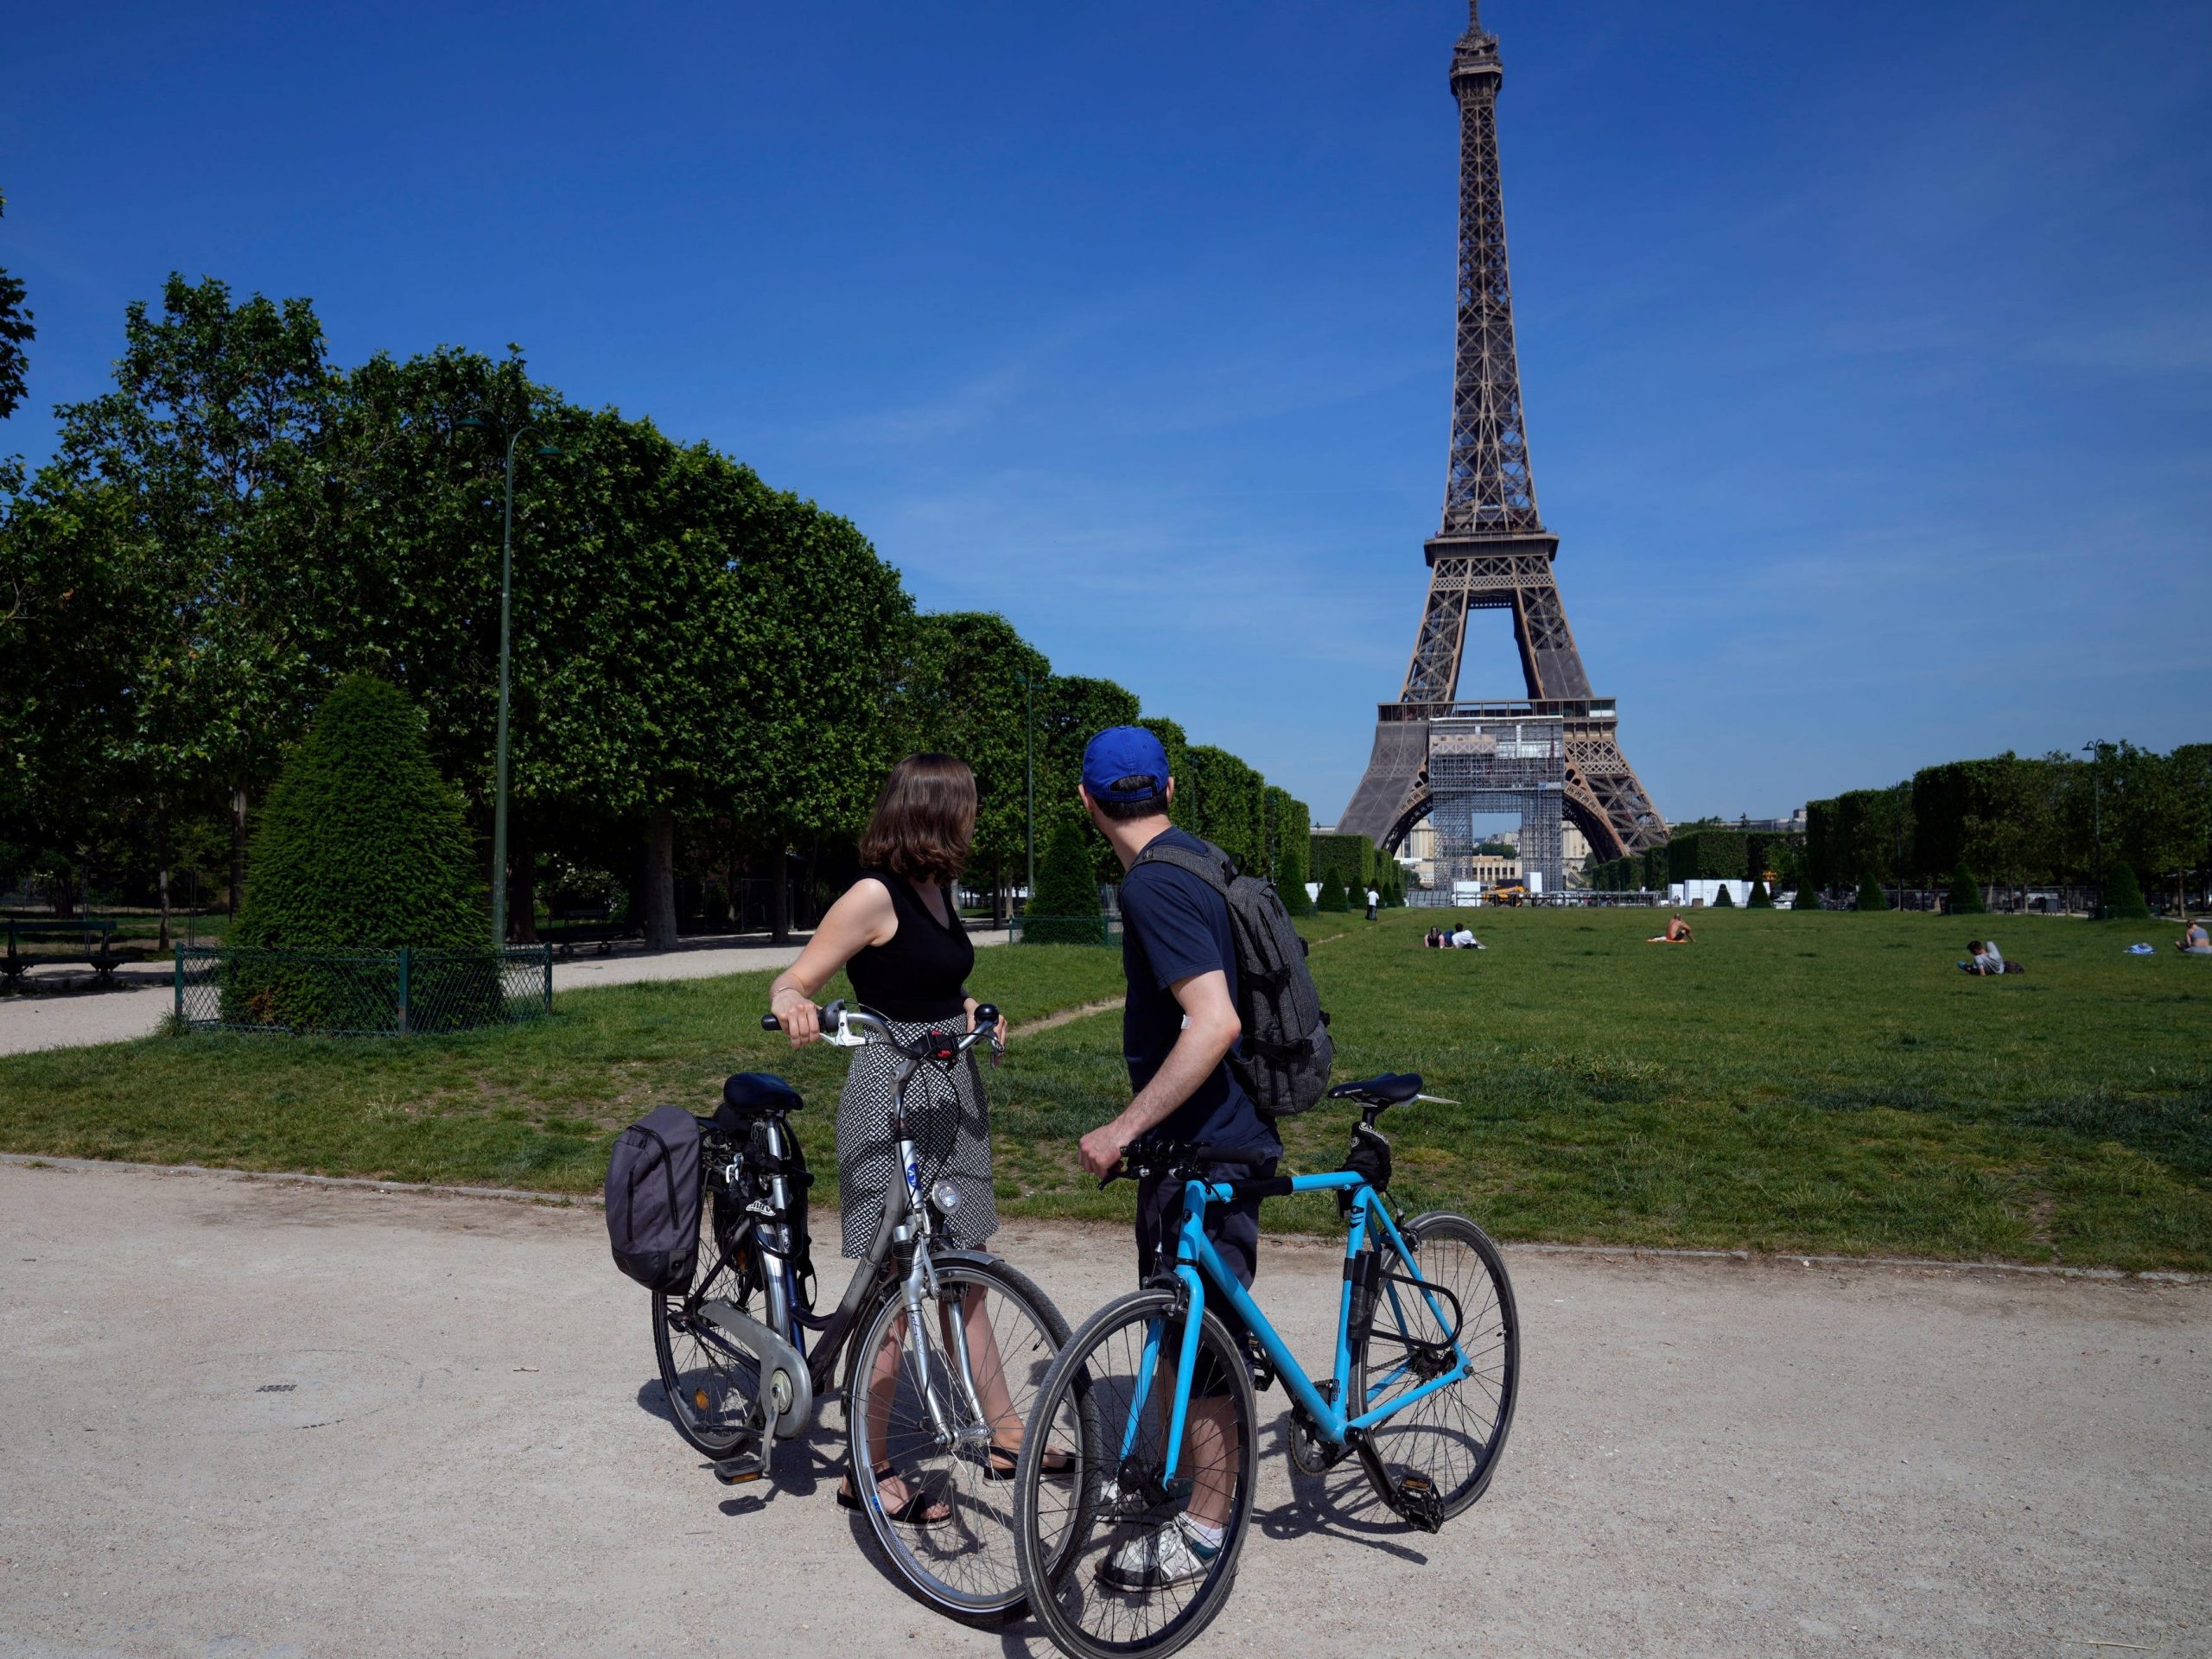 Fietsers bij de Eiffeltoren in Parijs. Foto: AP Photo/Francois Mori